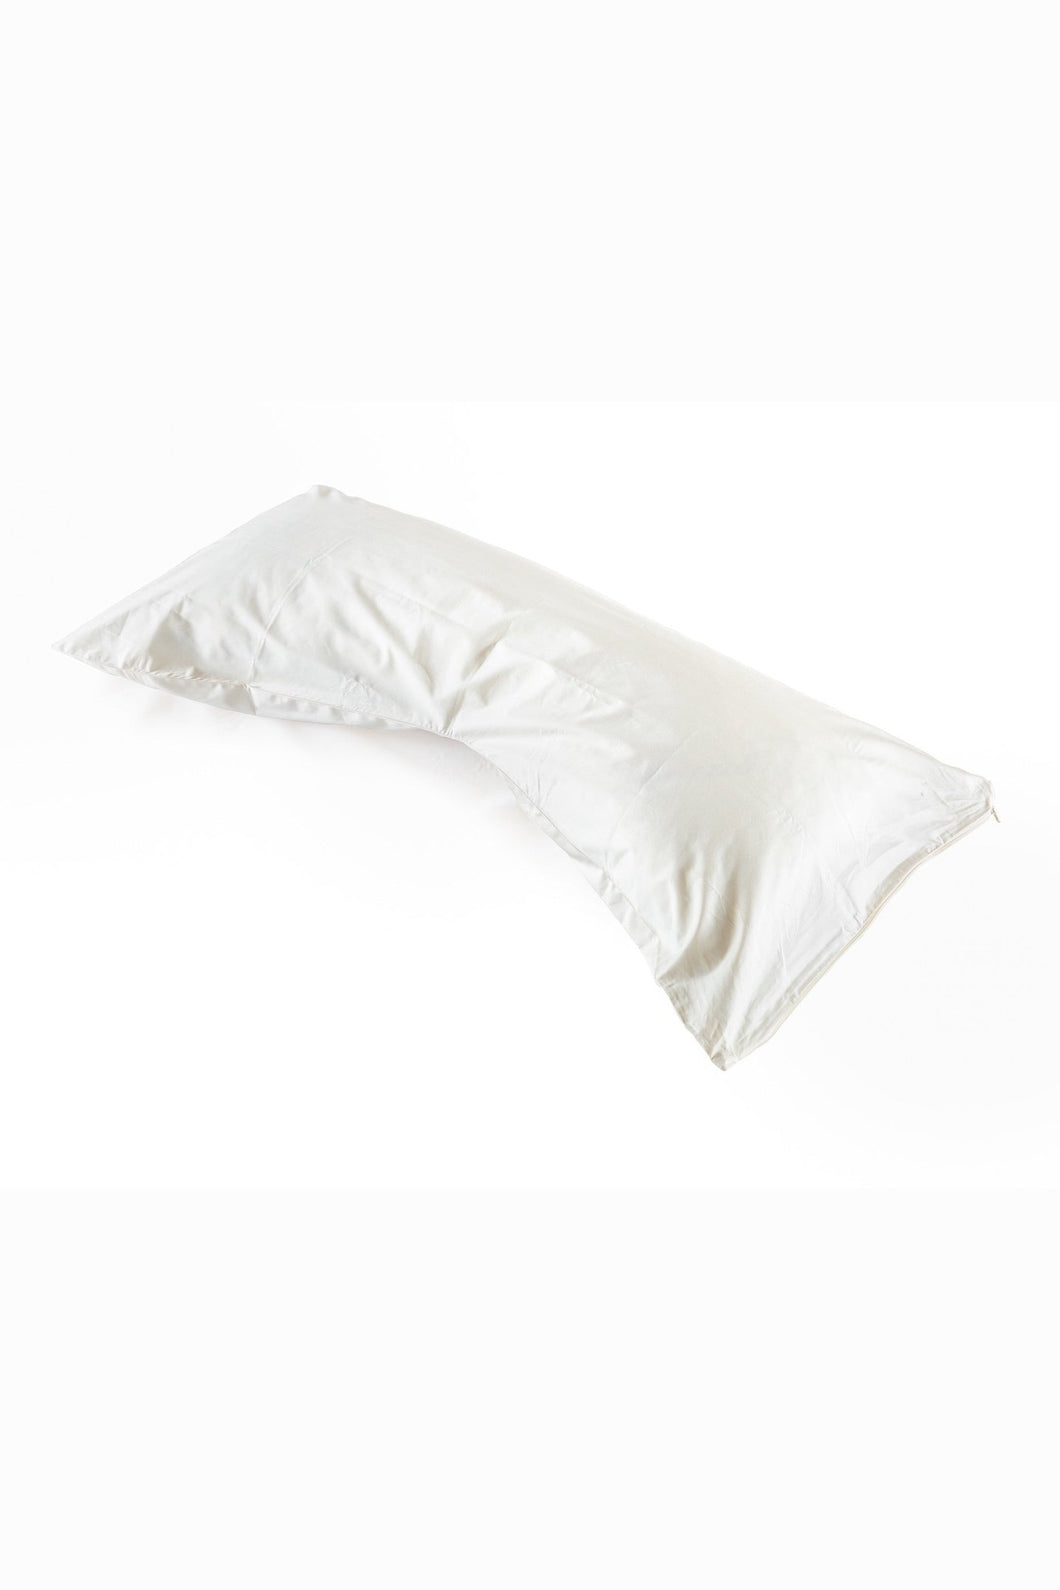 Organic Cotton Pillowcase for Body Pillow